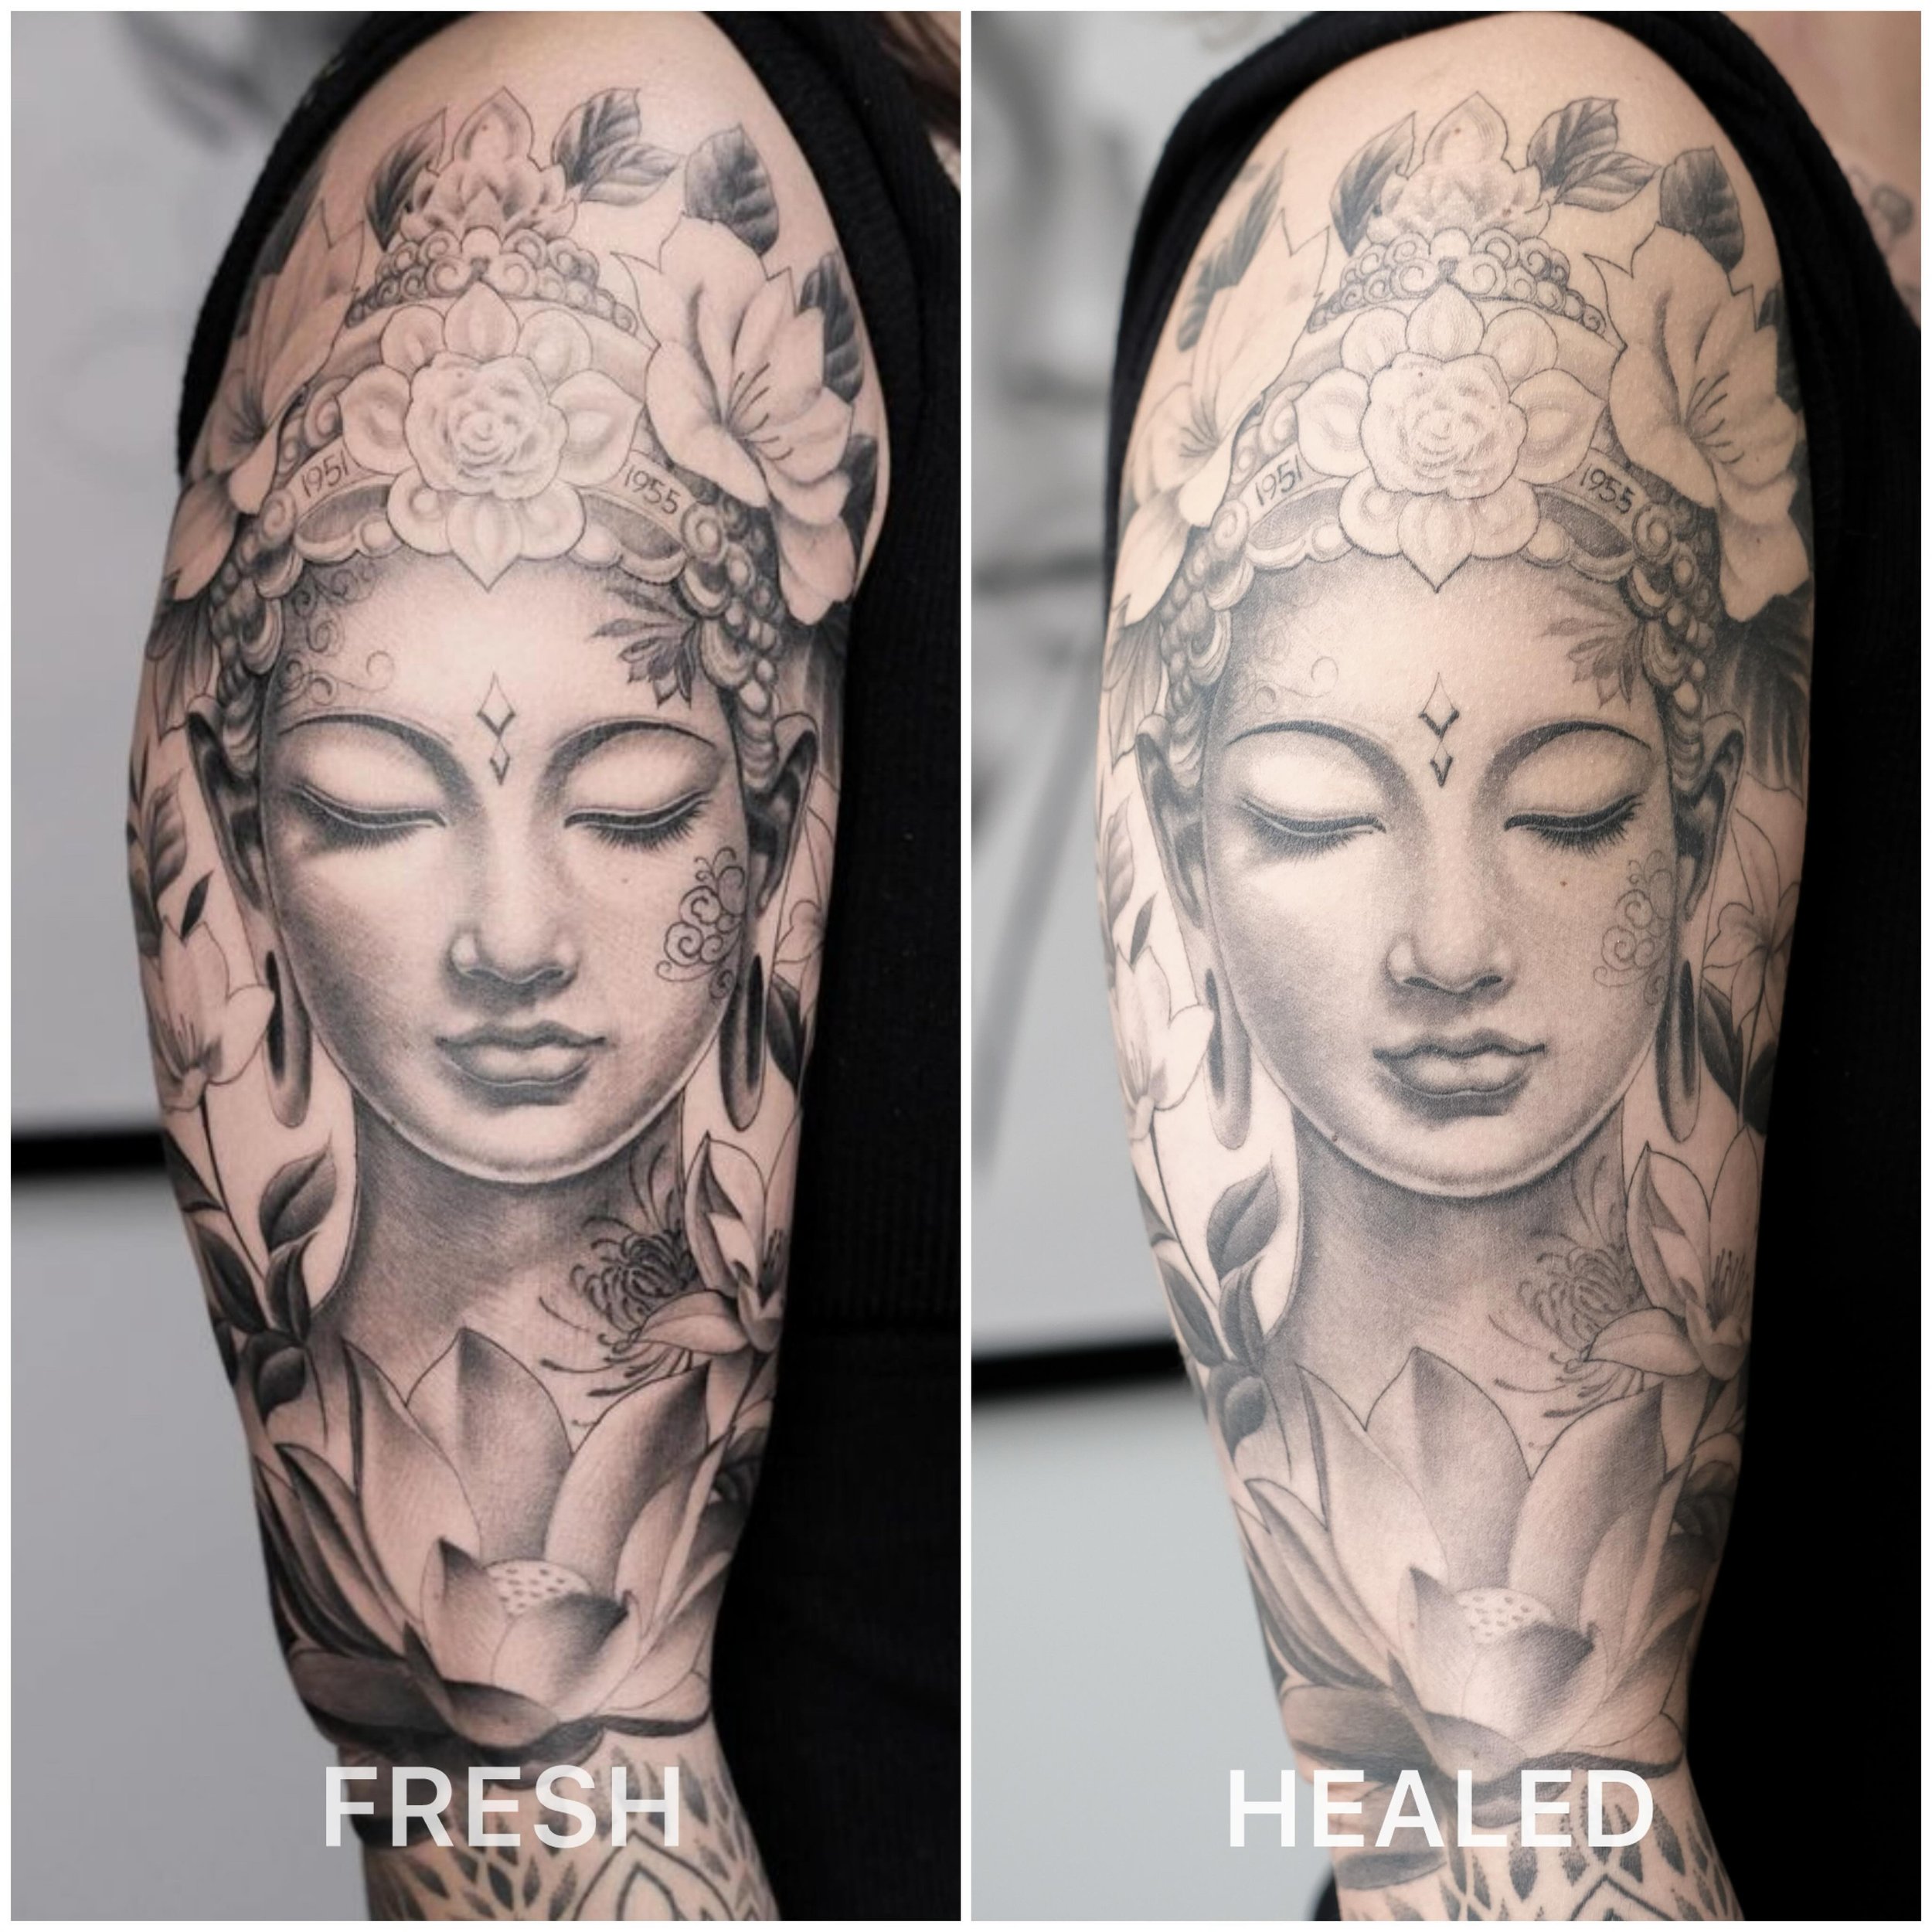 Fresh vs. Healed
Danke Esra
.
.
.
.
#realistictattoo #waldemartattooing #waldilism #blackandgreytattoo #nobletattoo #nobletattoo #waldemartattooing #art #tattooart #artist #tattooartist #inked #fineline #delicattattoo #fyp #germantattooer